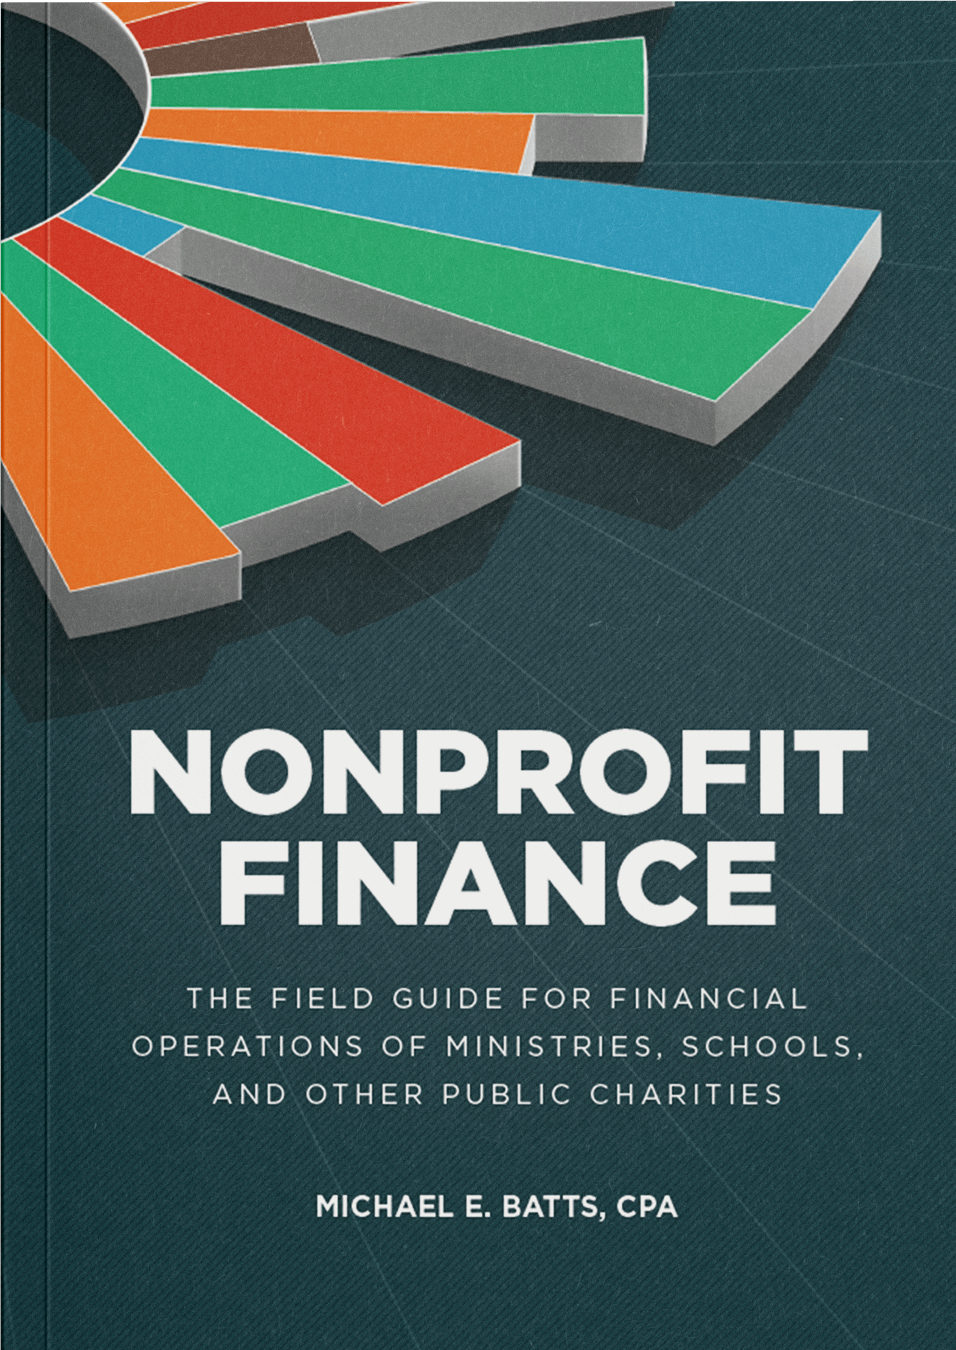 nonprofit_finance_ftd_lg